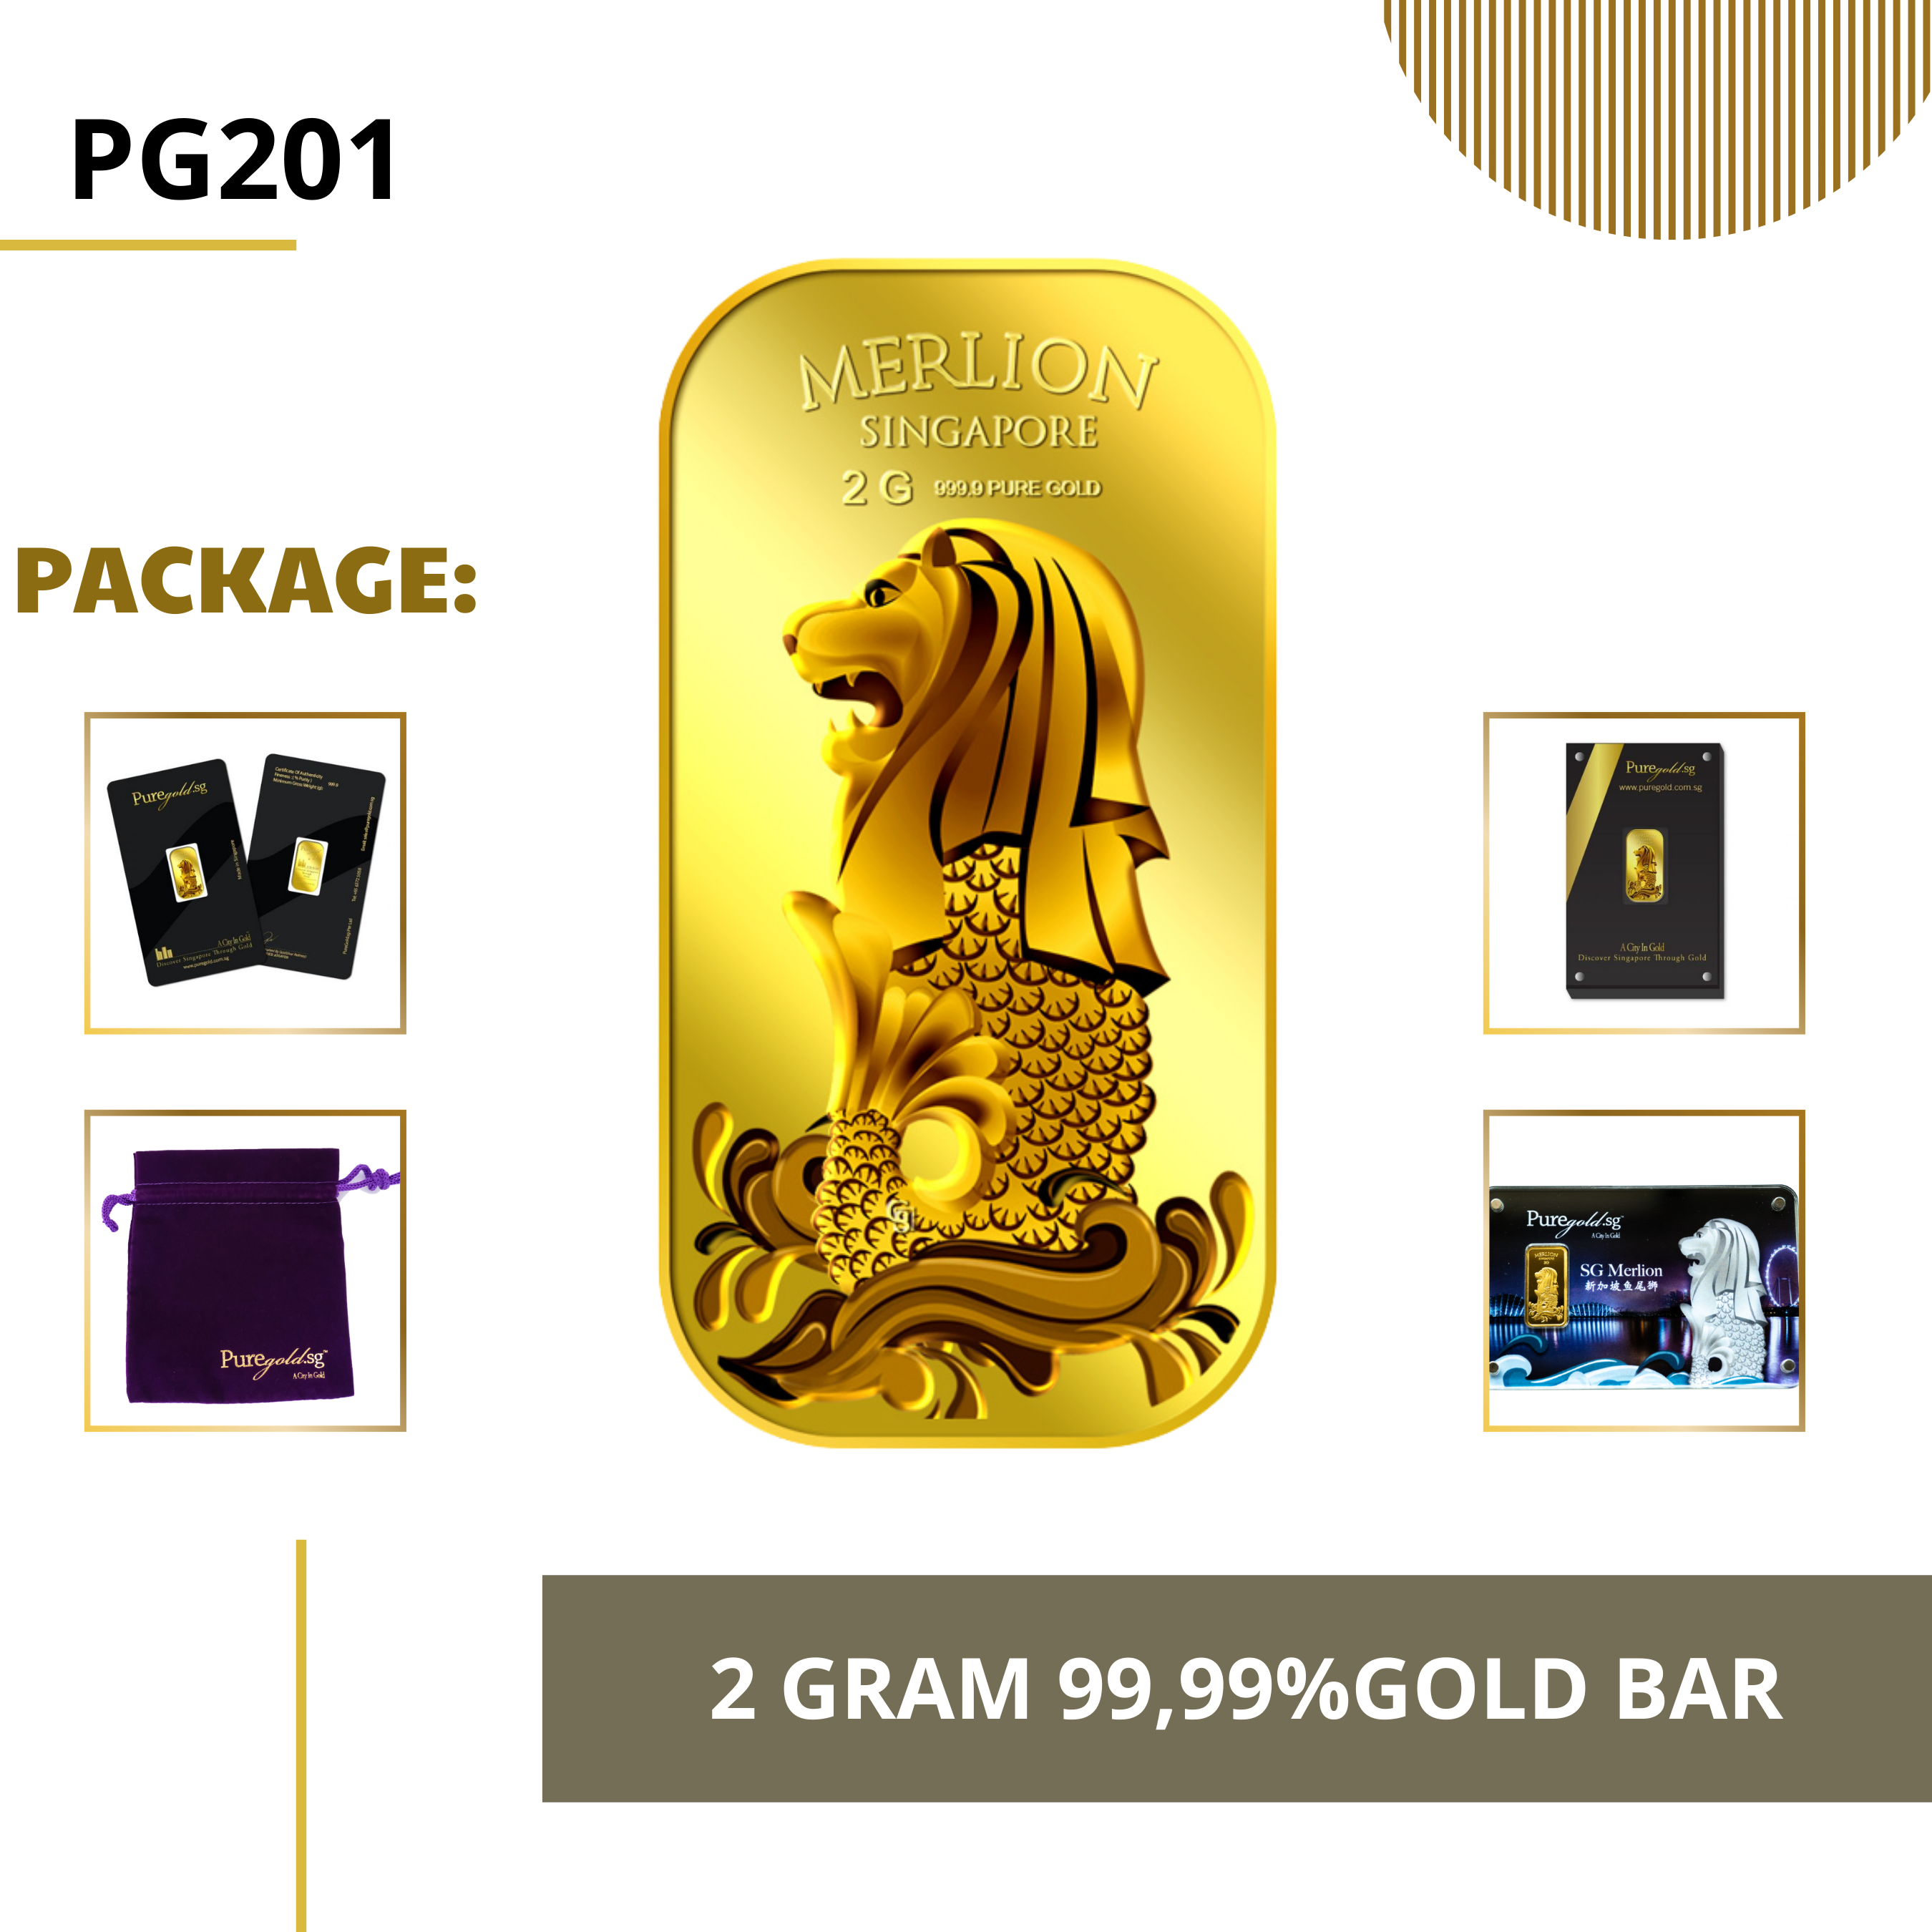 PURE GOLD 99.99% ทองคำแท่ง / 2Gram Merlion Sea gold bar/ ทองคำแท้จากสิงคโปร์ / ทองคำ 2 กรัม / ทอง 99.99% *การันตีทองแท้*